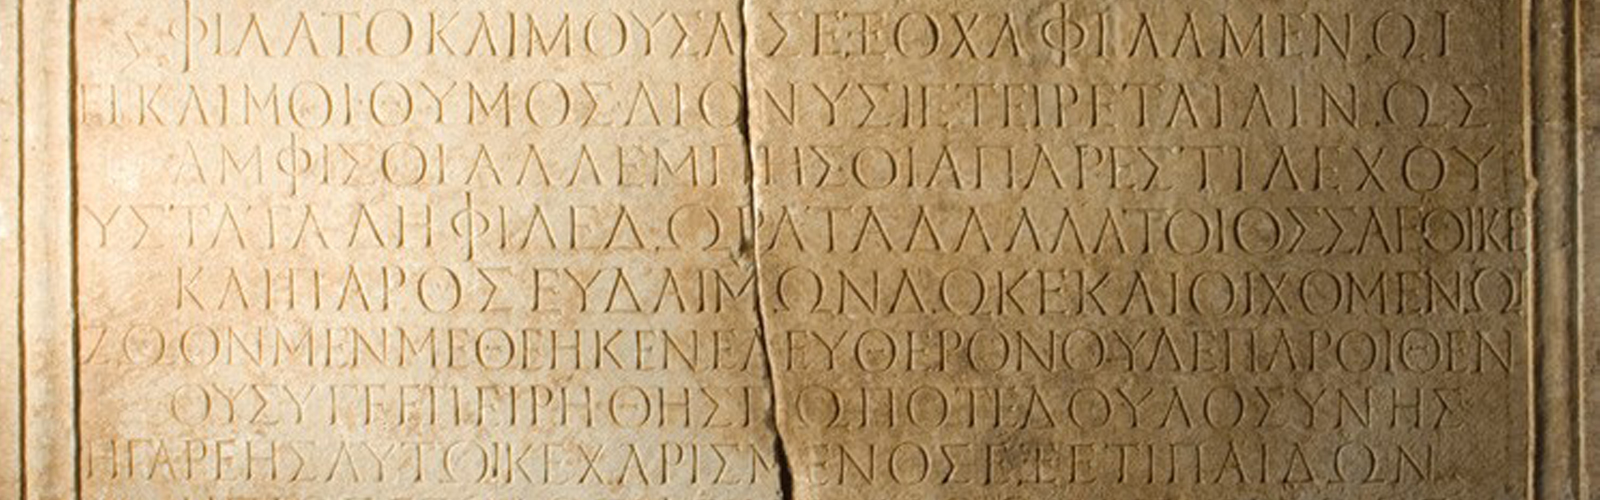 Banner Symposium World Of The Greek Epigrams